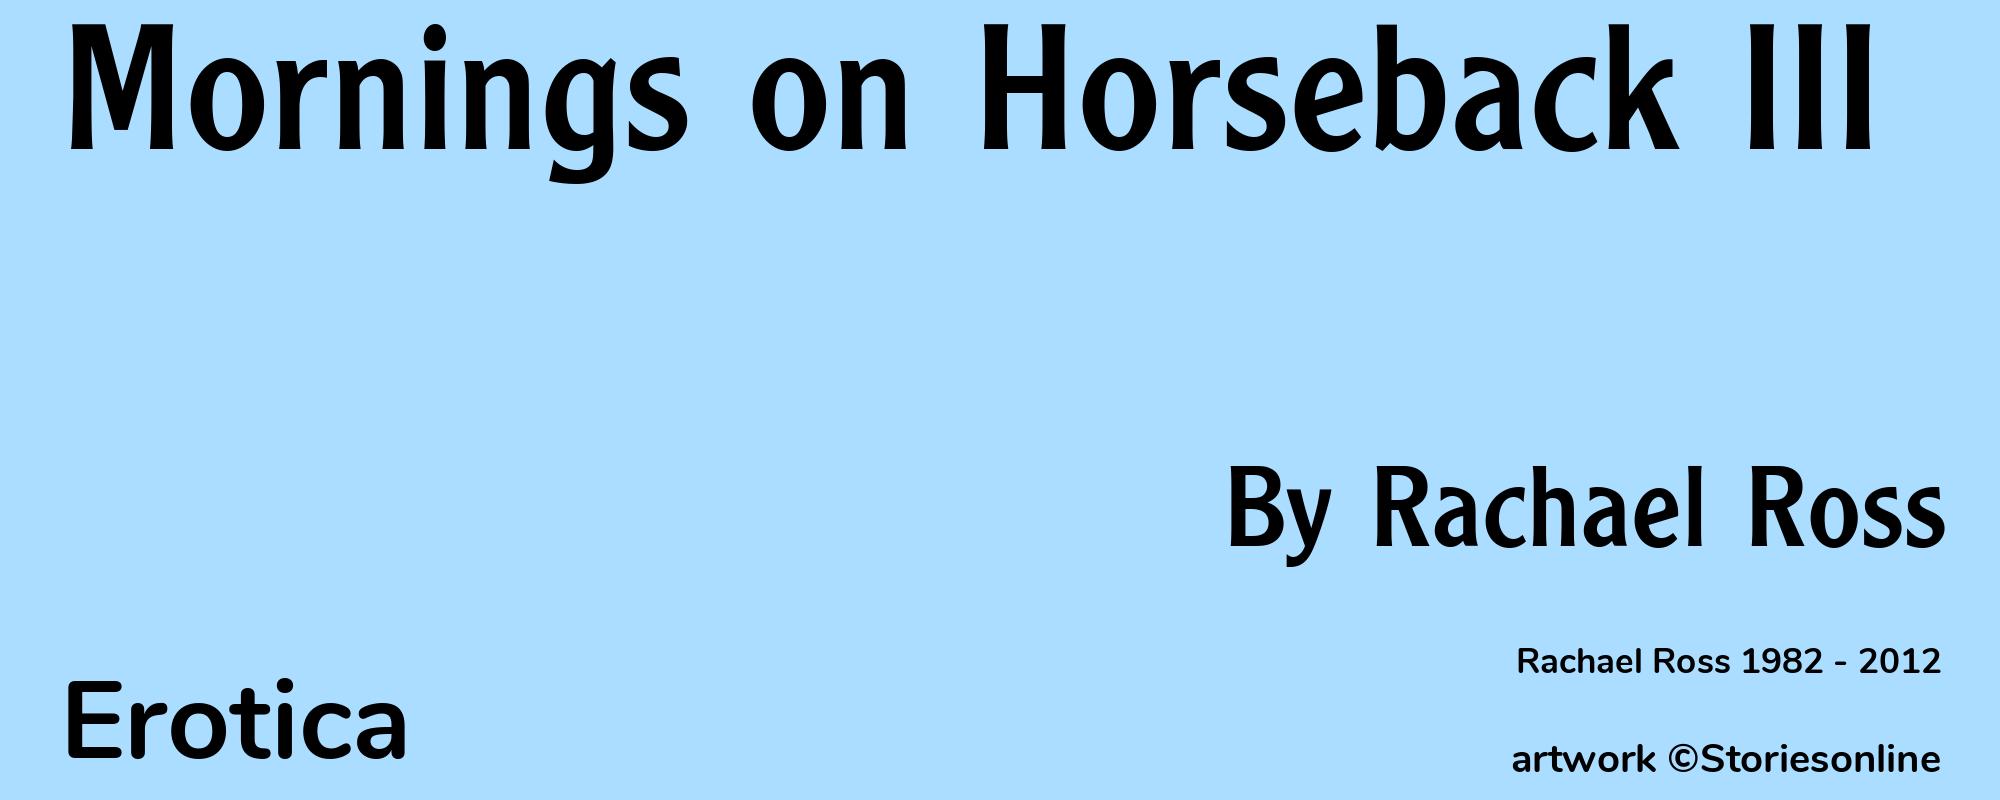 Mornings on Horseback III - Cover